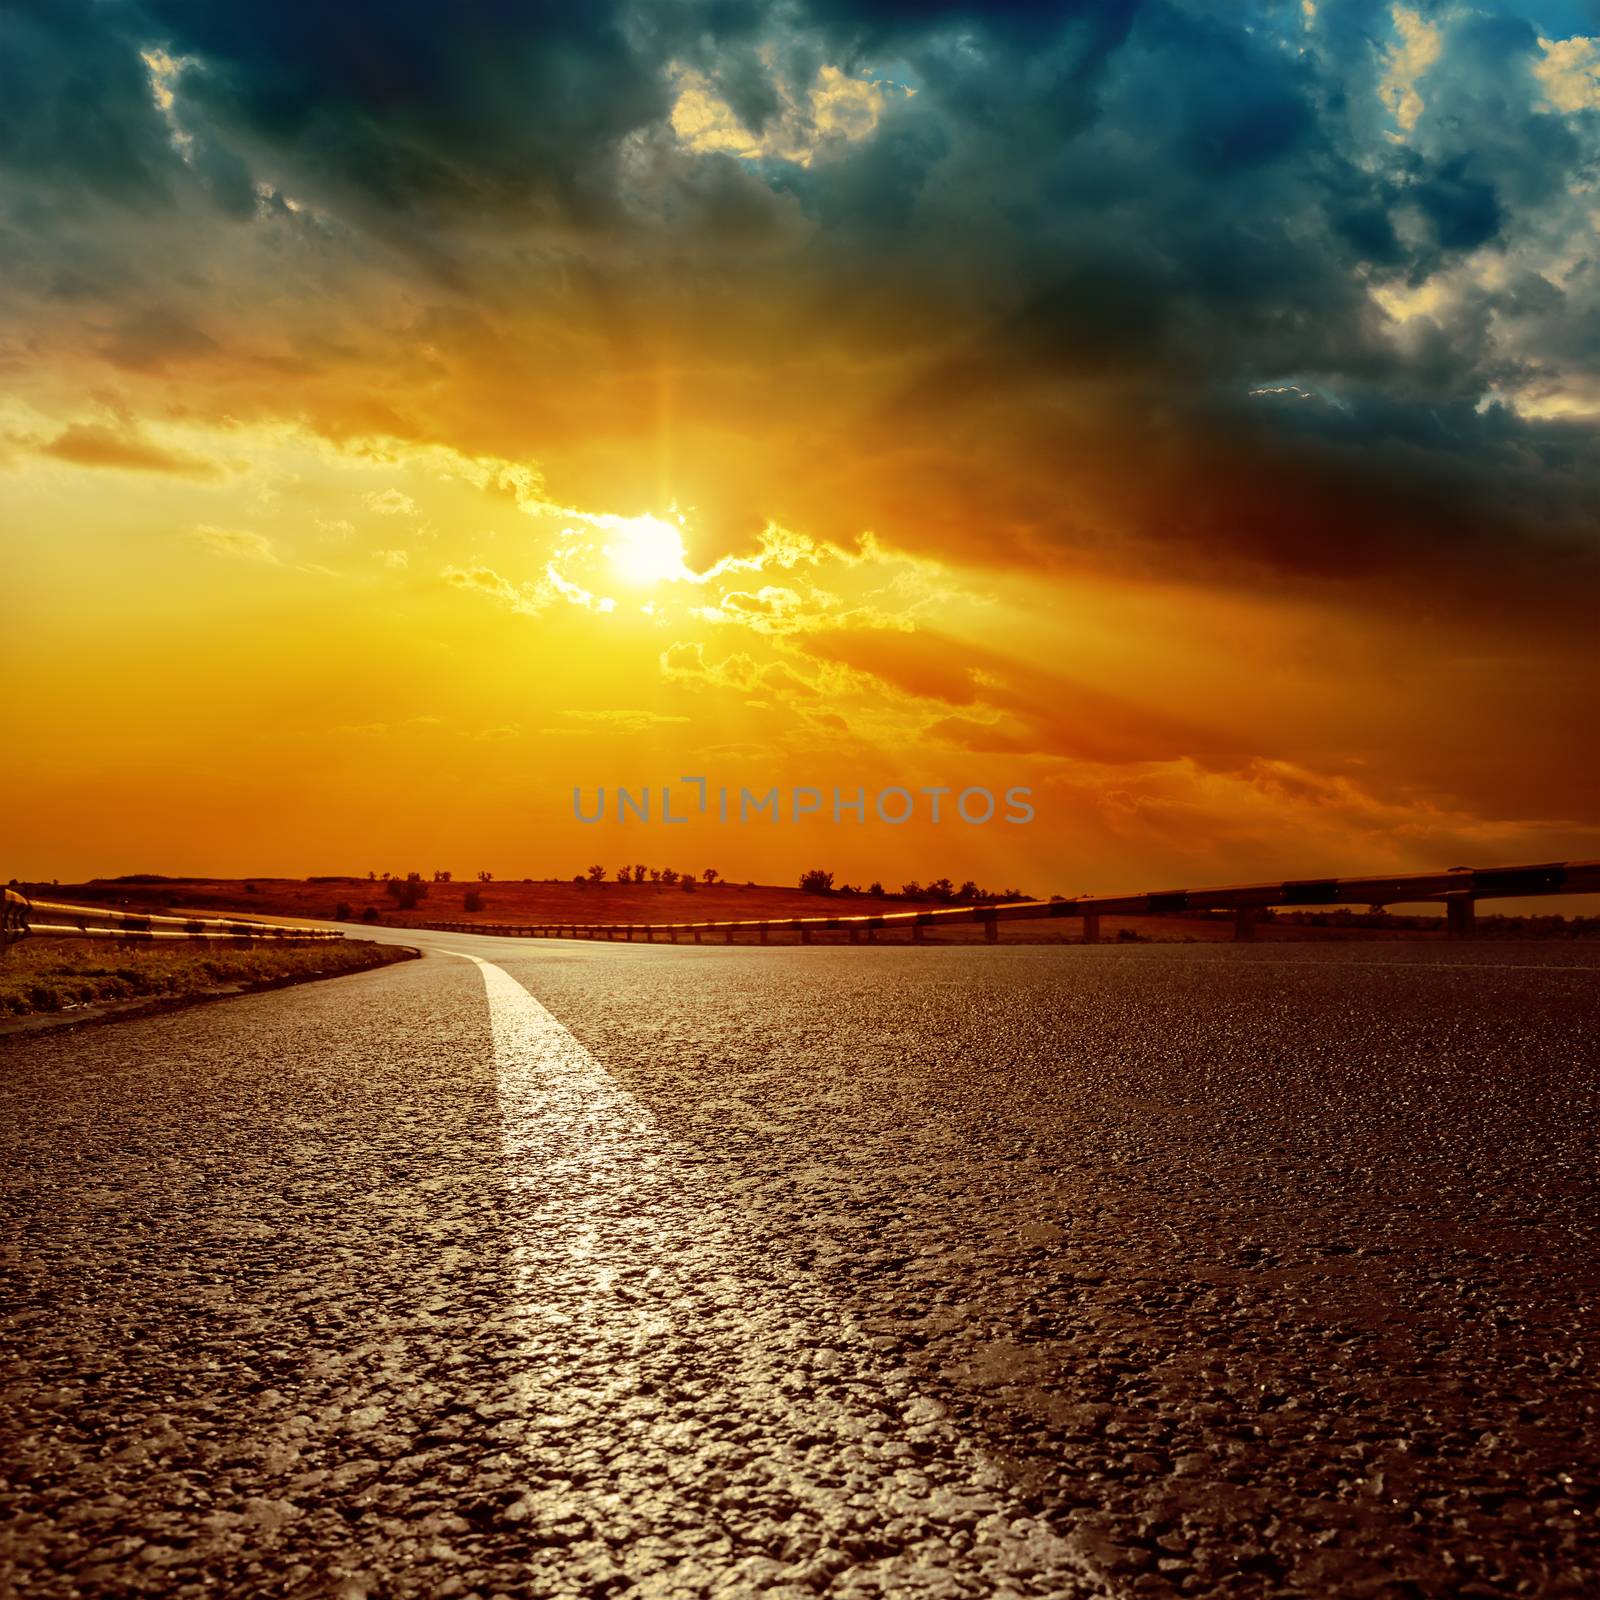 dramatic sunset and white line on asphalt road to horizon